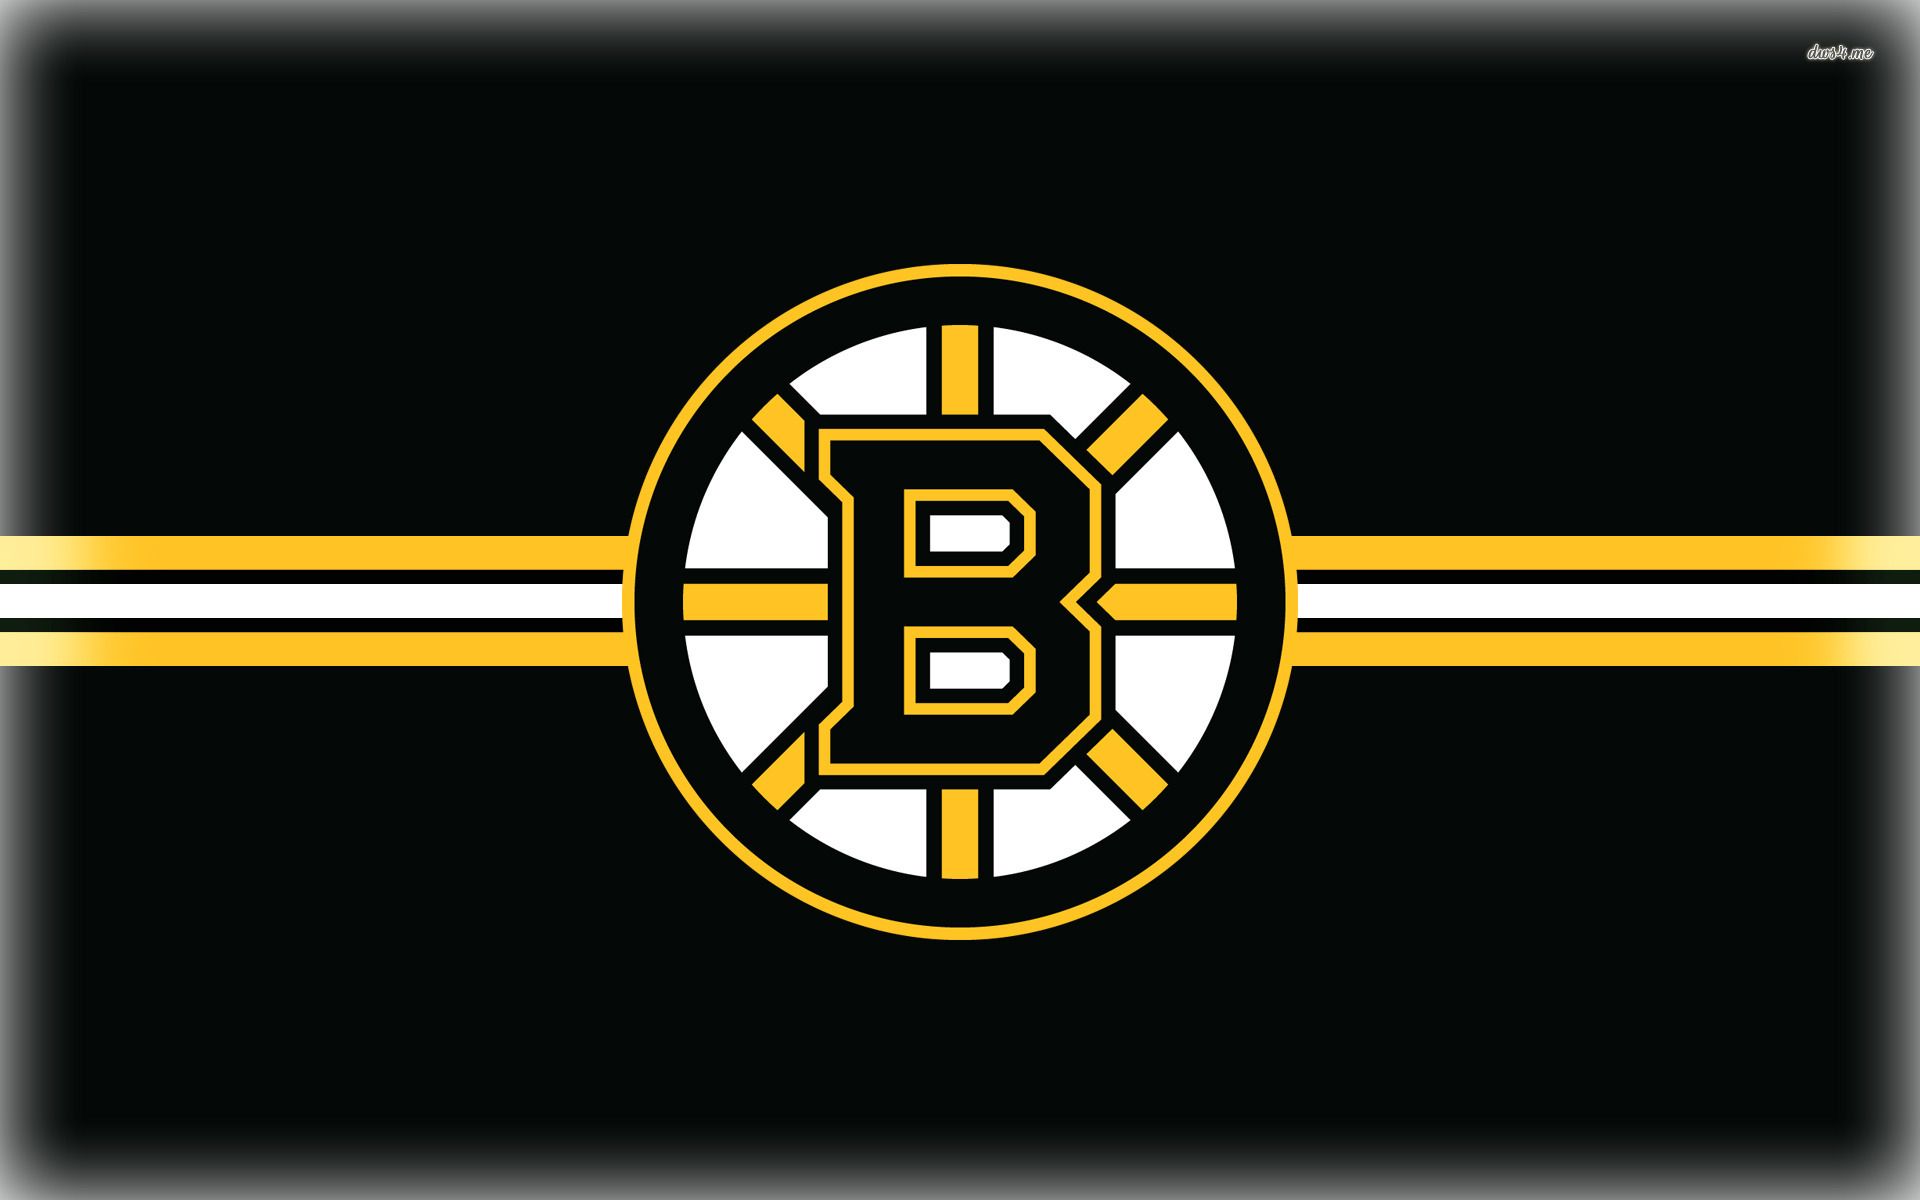 Boston Bruins wallpaper - Sport wallpapers - #1677